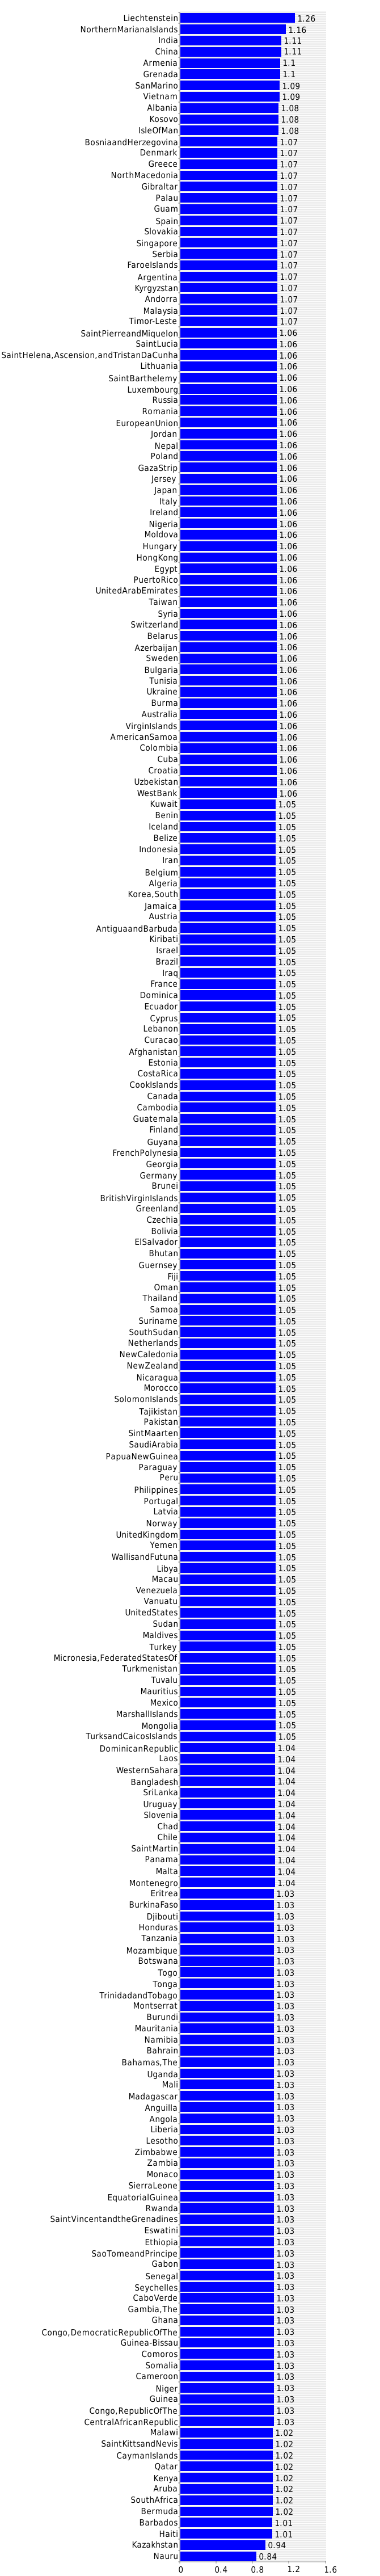 Graph Of Sex Ratio At Birth Malesfemale 2020 Country Comparisons 7689